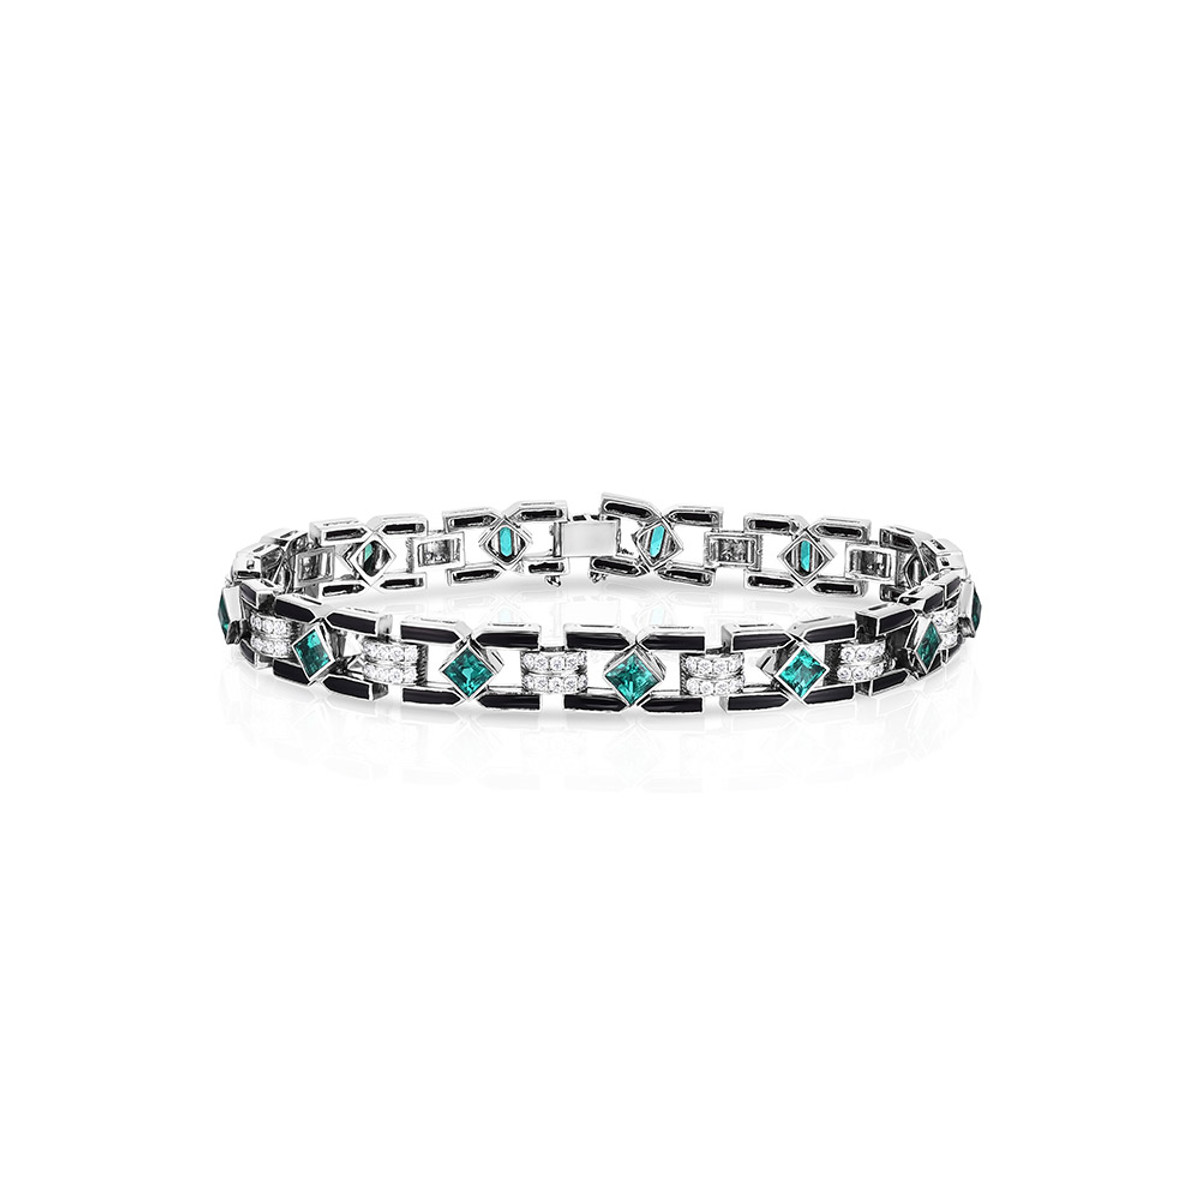 Hyde Park Collection Platinum Onyx, Emerald and Diamond Bracelet-62453 Product Image